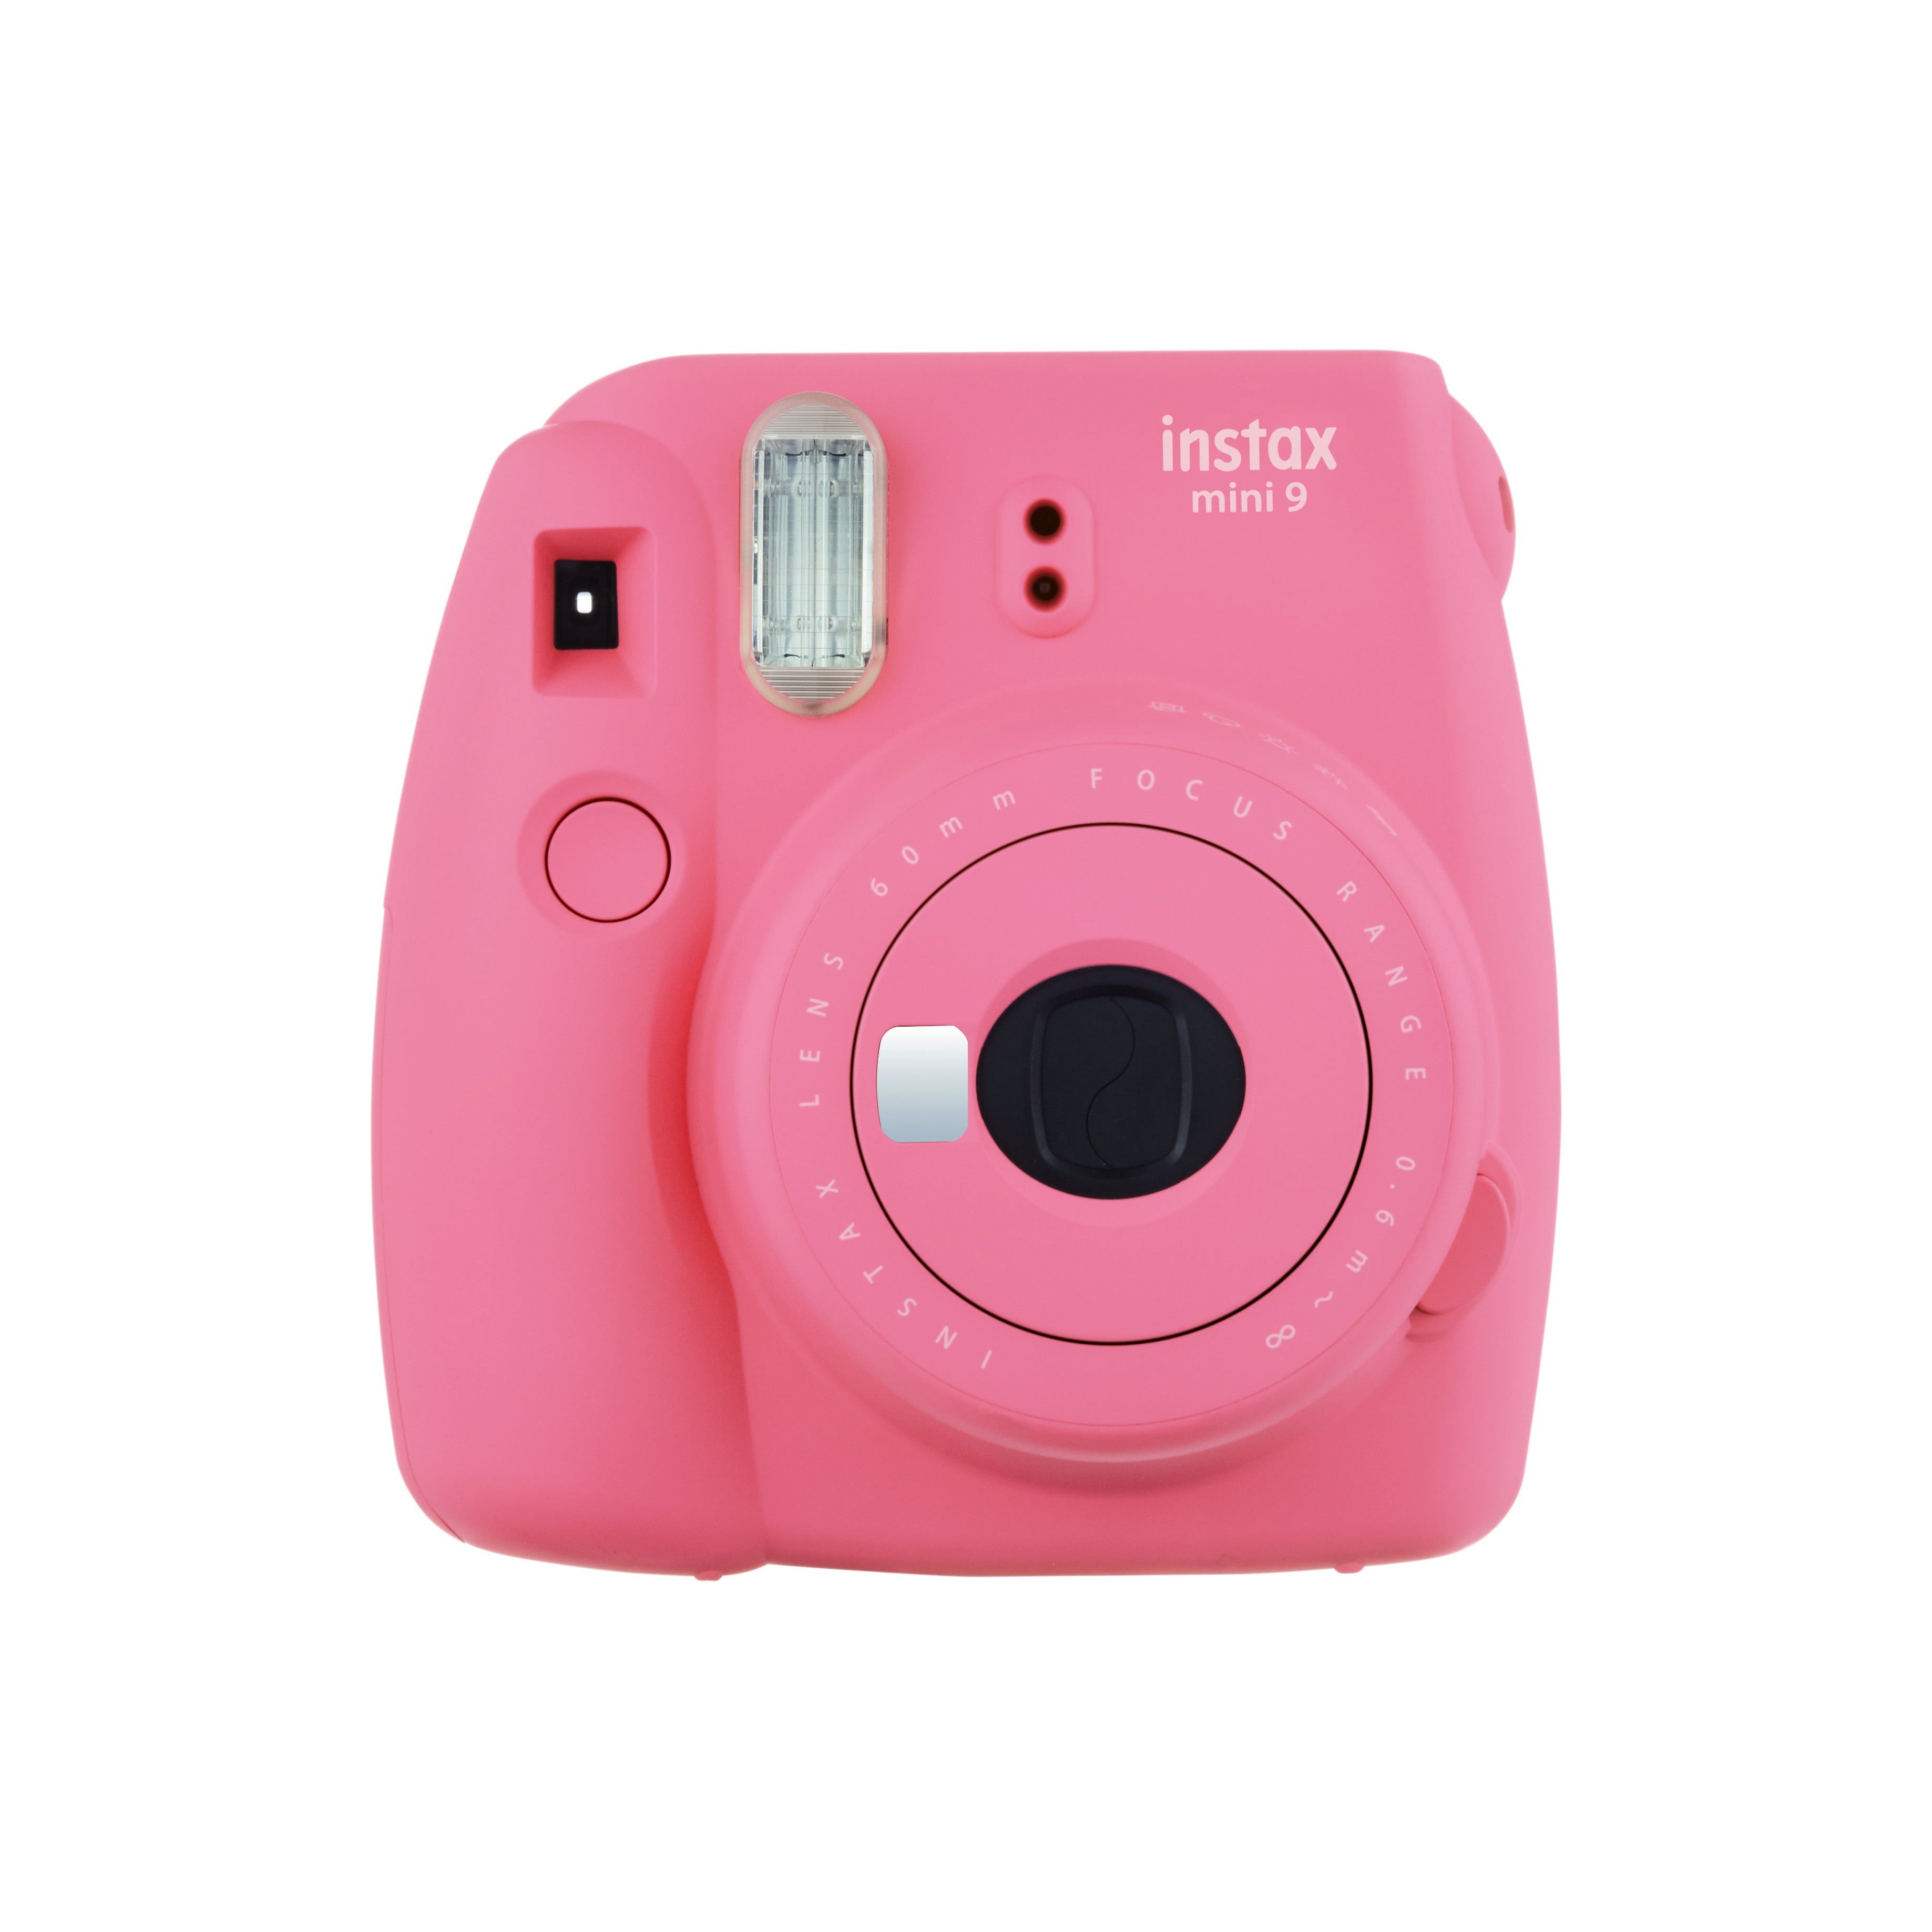 Fujifilm Instax Mini 9 Instant Camera - Flamingo Pink - Refurbished Excellent